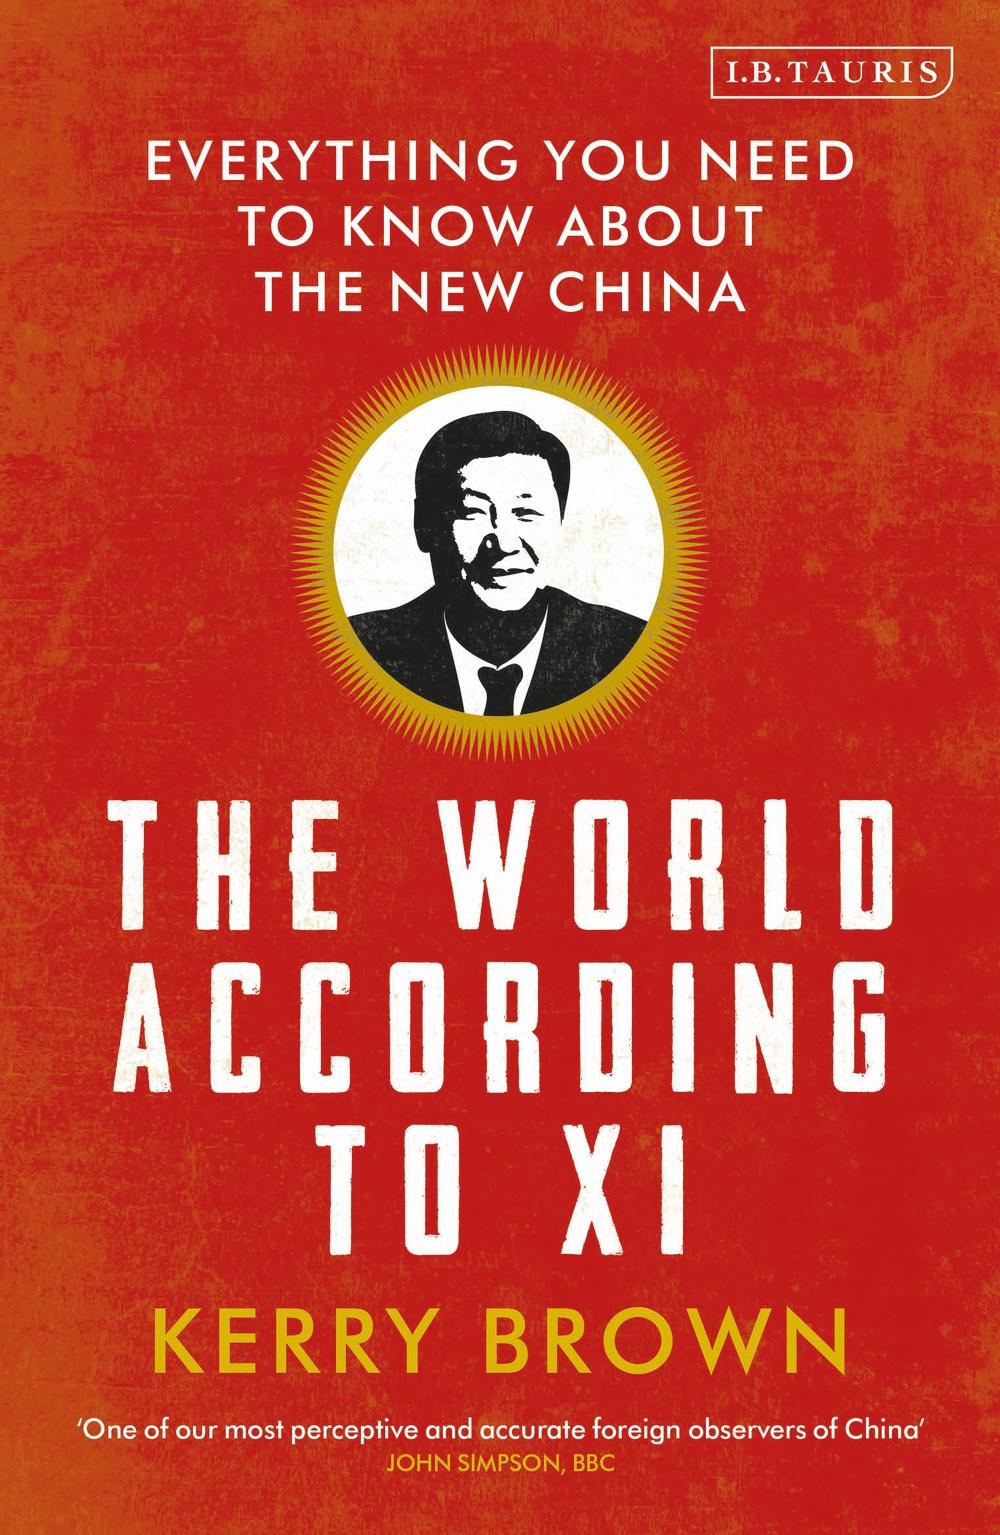 World According to Xi